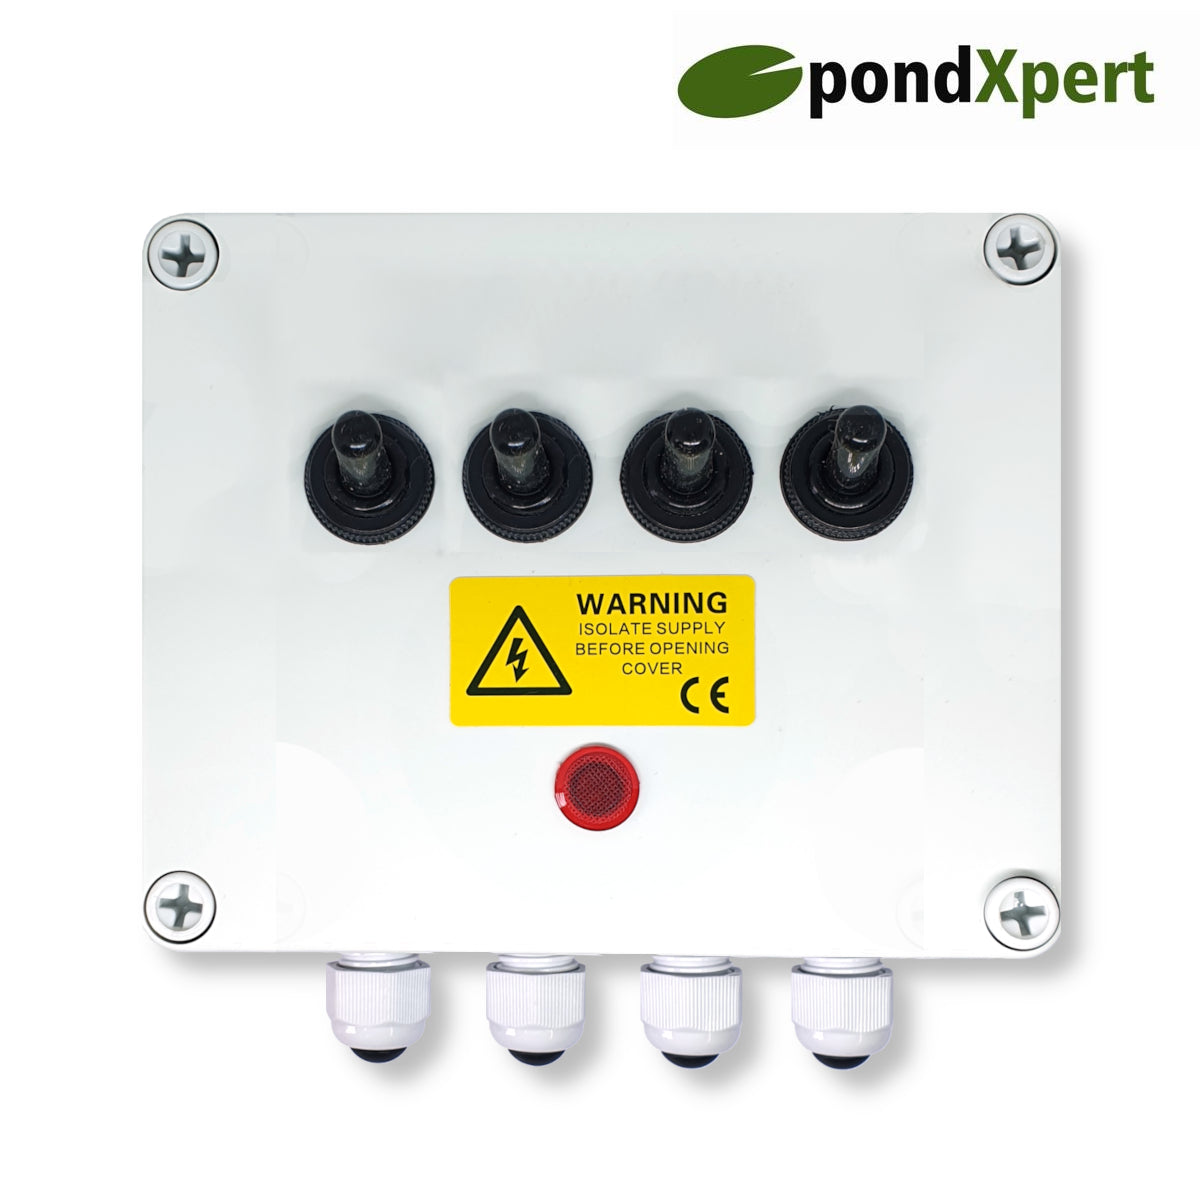 PondXpert EasySwitch 4 way Electrical Switch Box